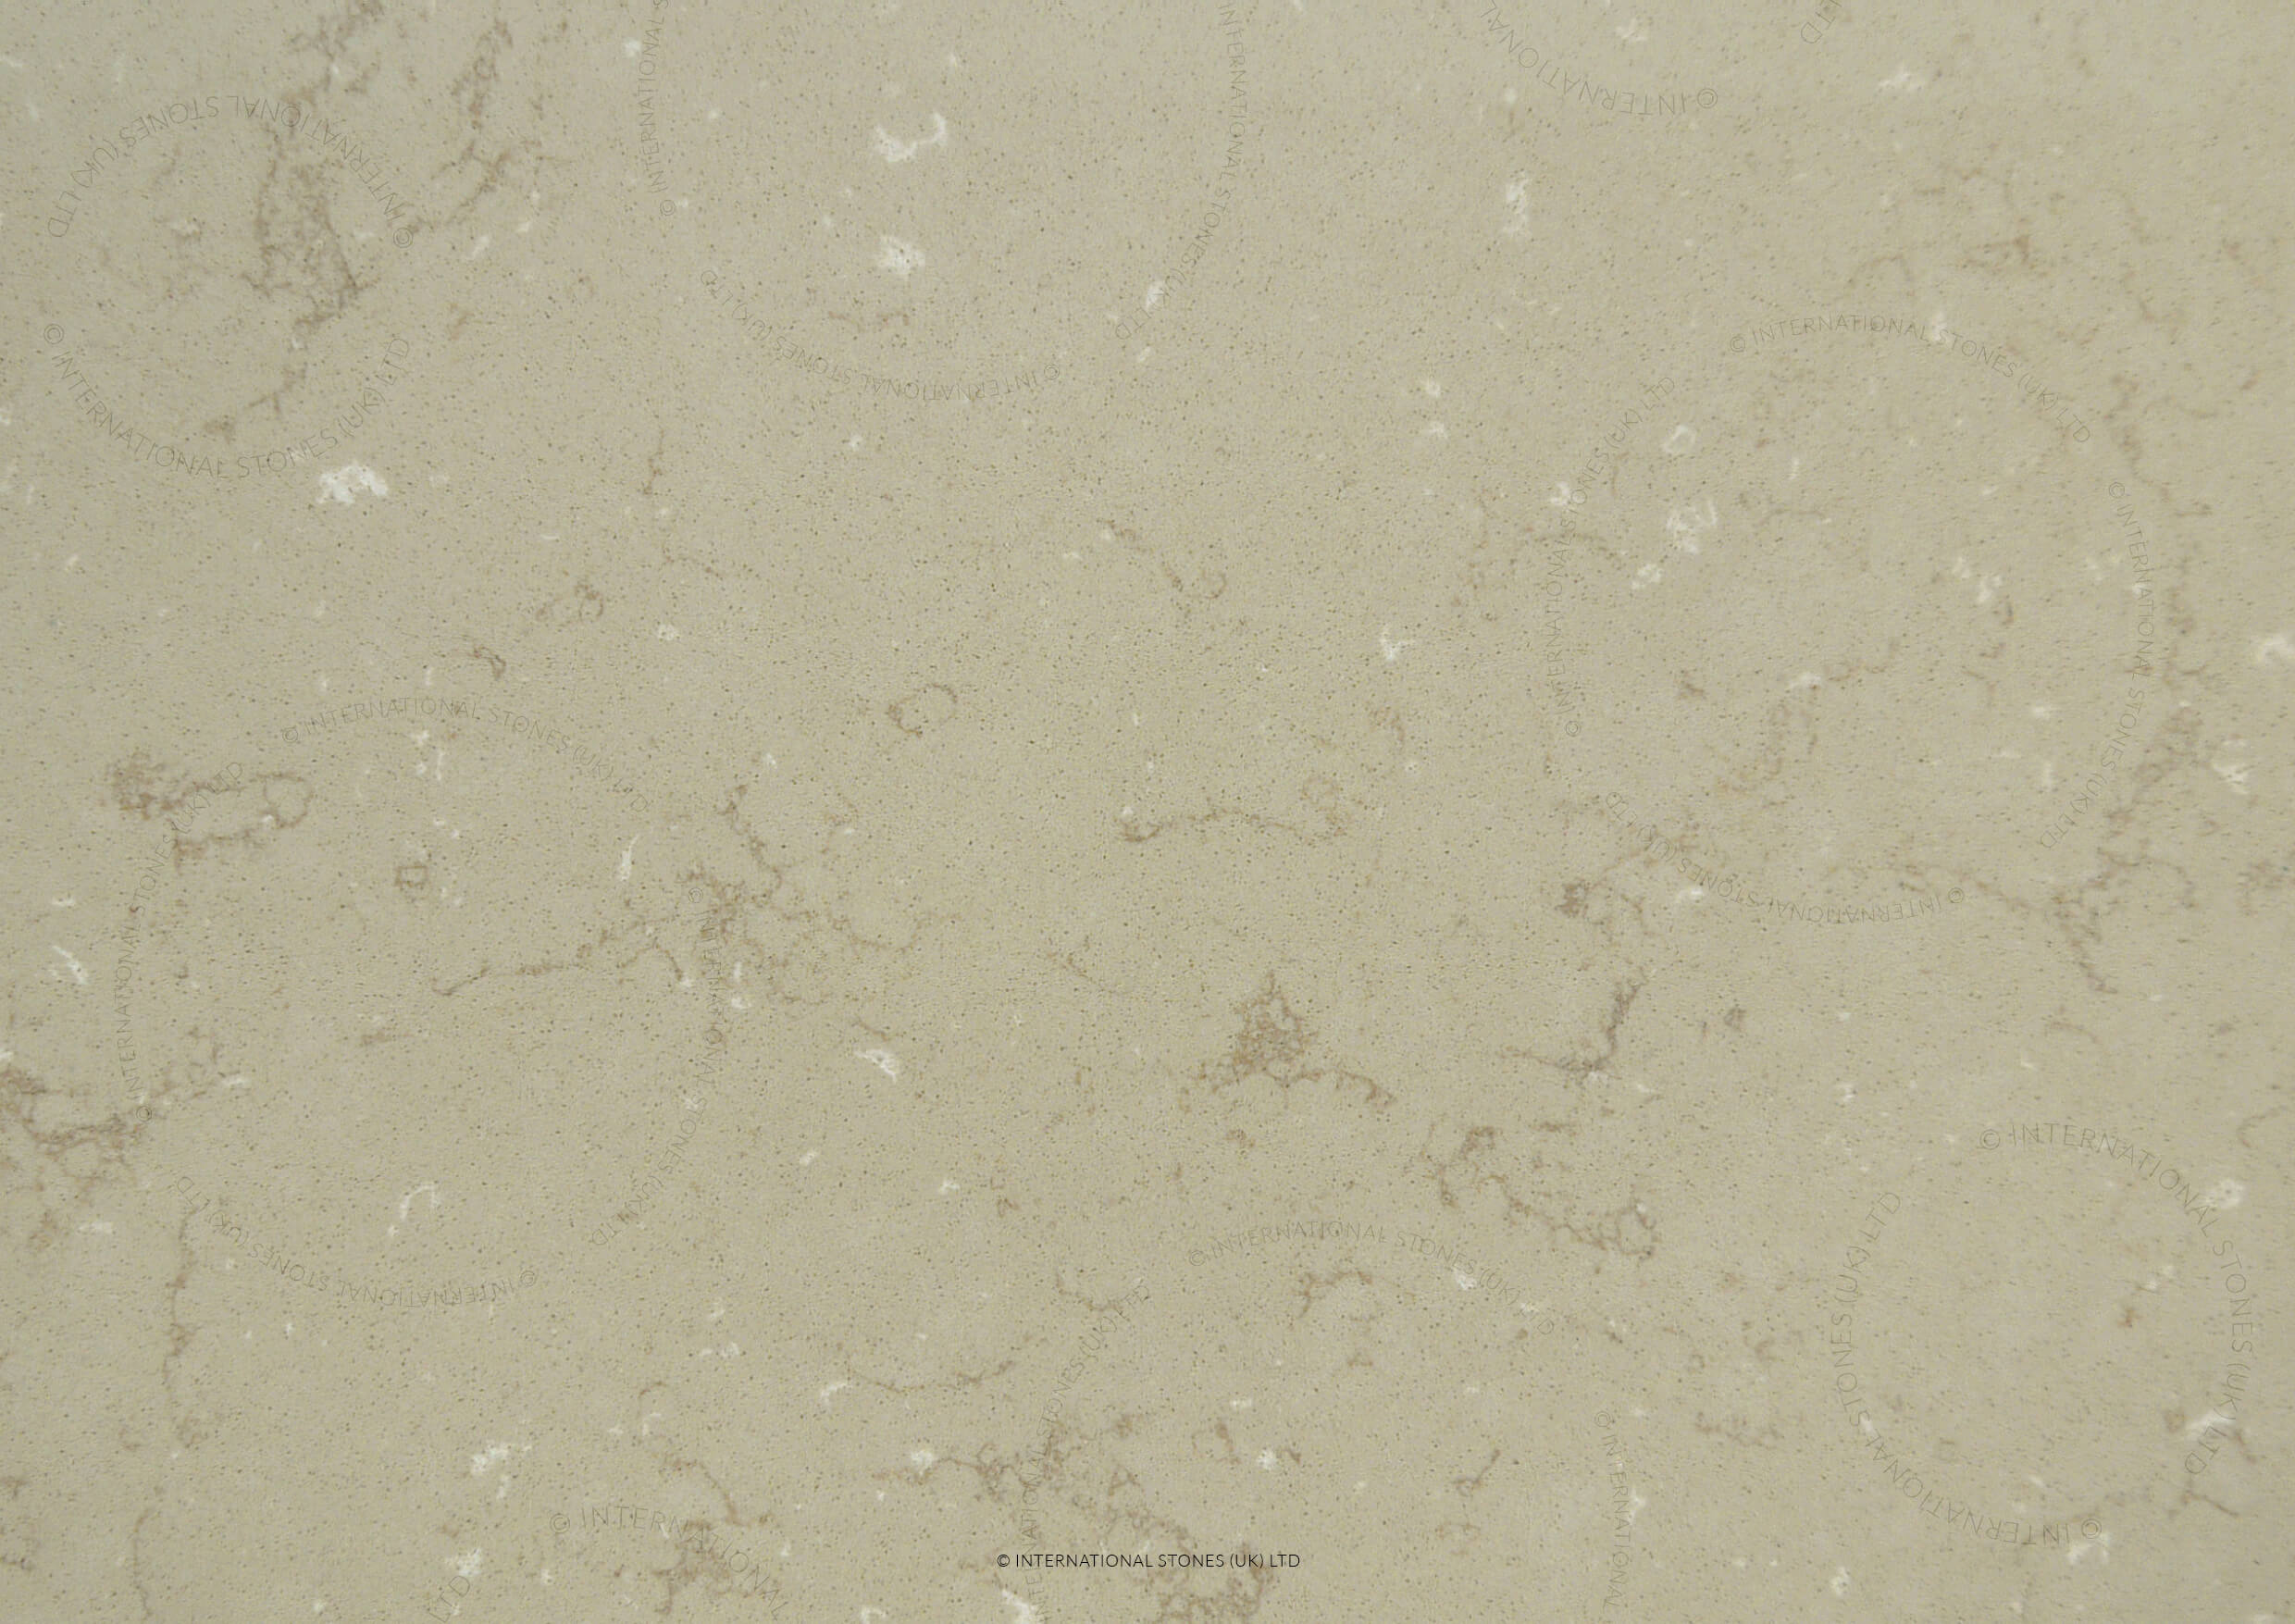 International Stone IQ Limestone - lincoln - Welton